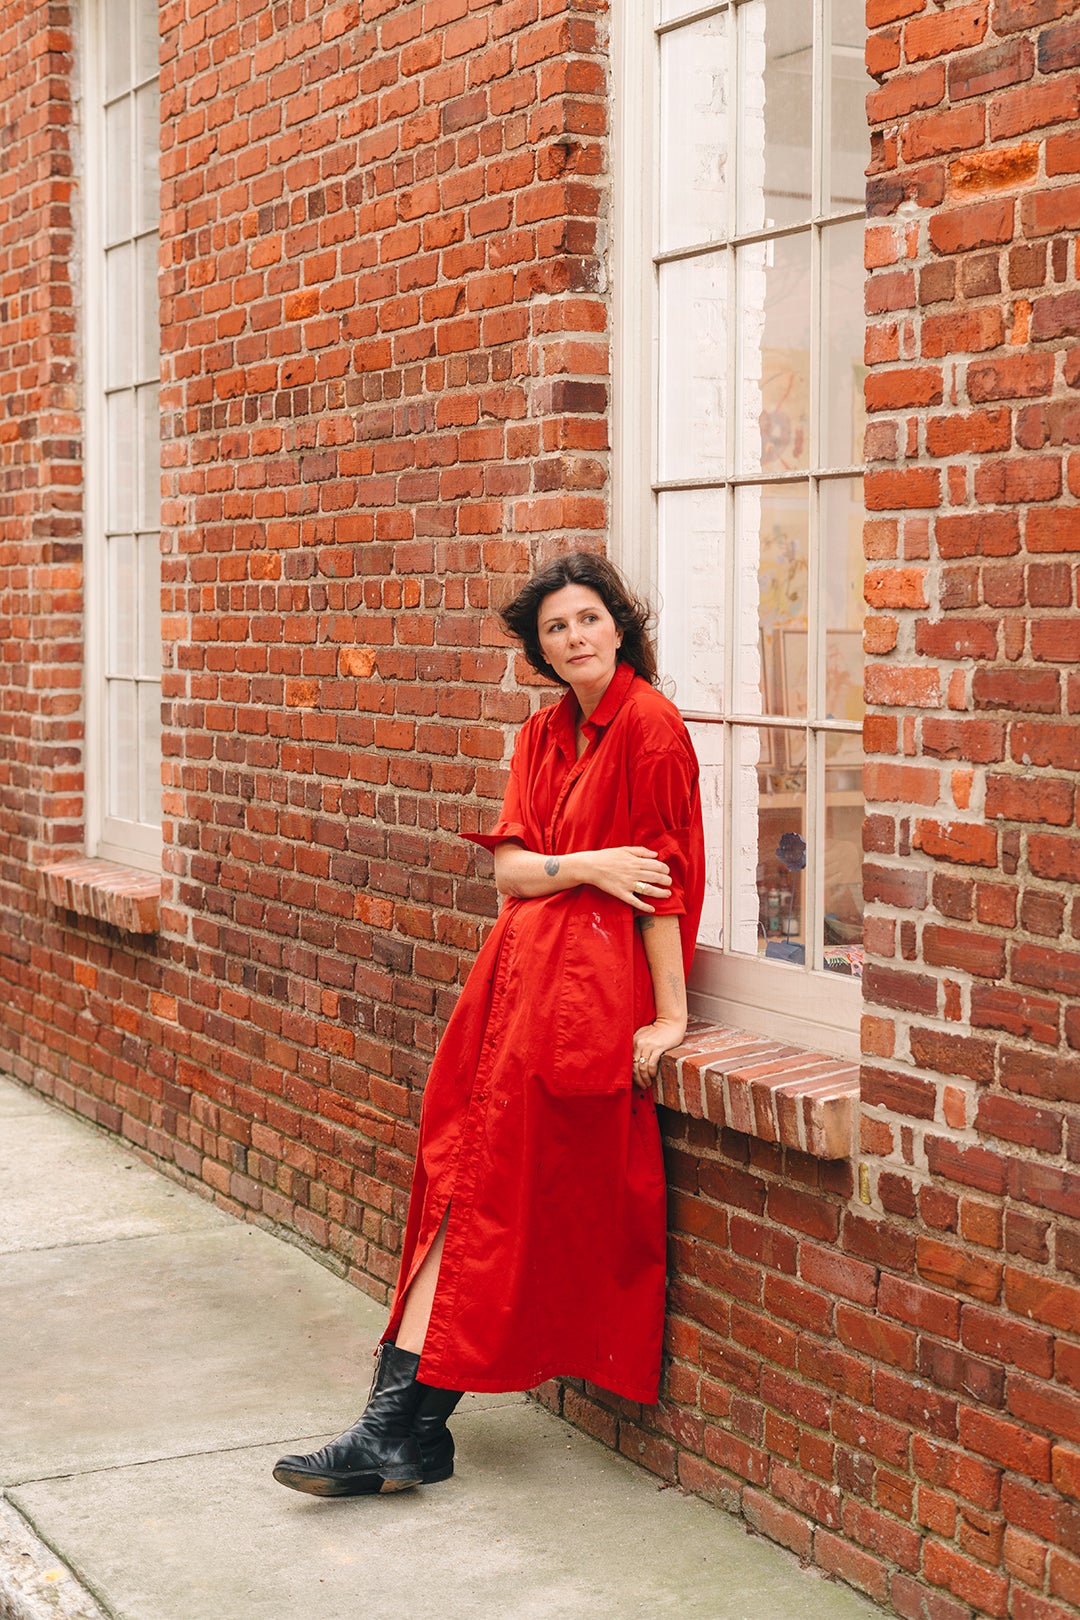 artist in red dress against brick exterior